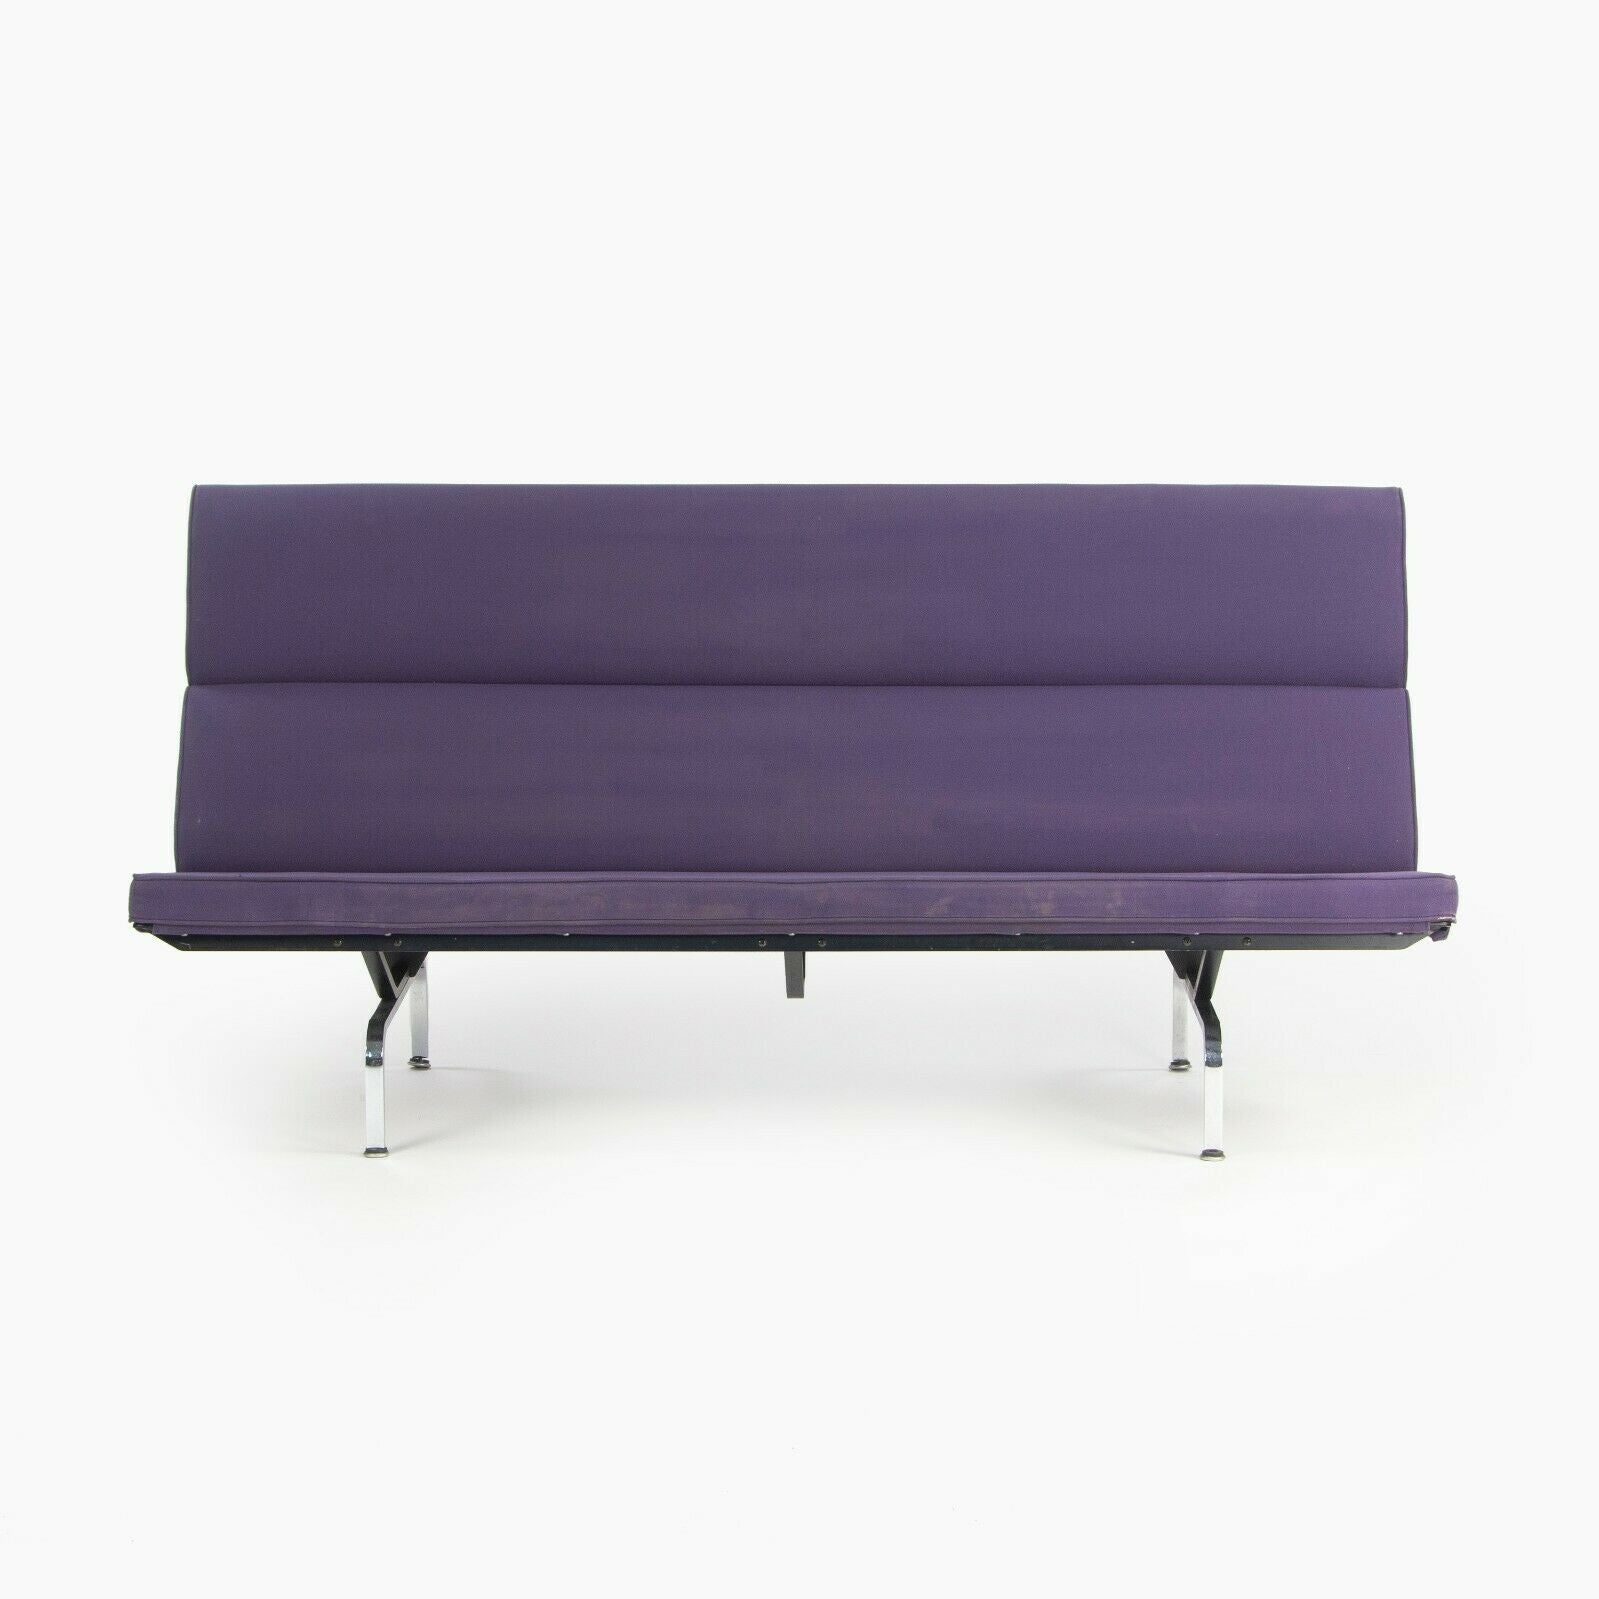 Sofa Compact